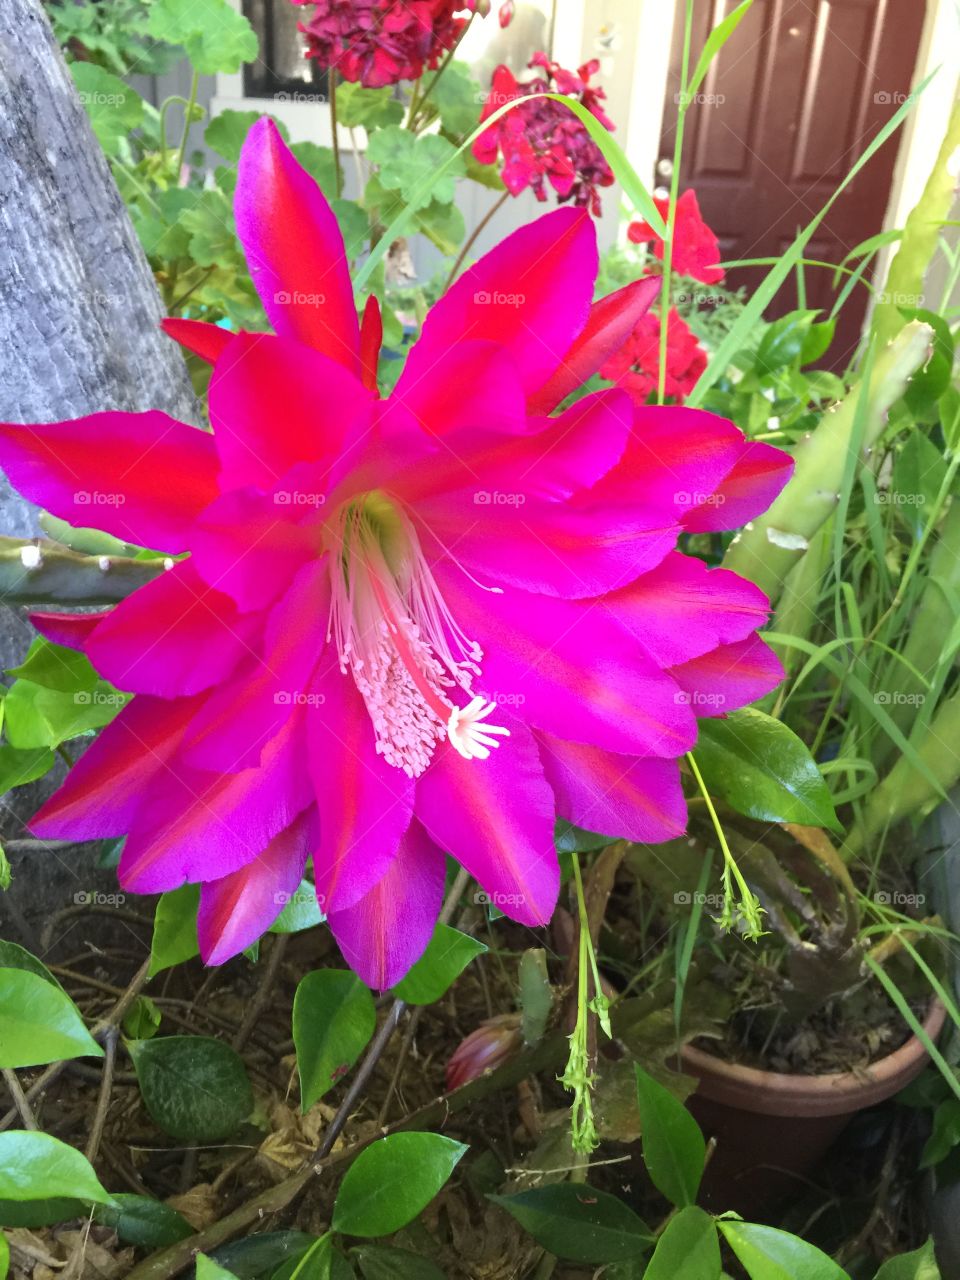 Rare pink cactus flower